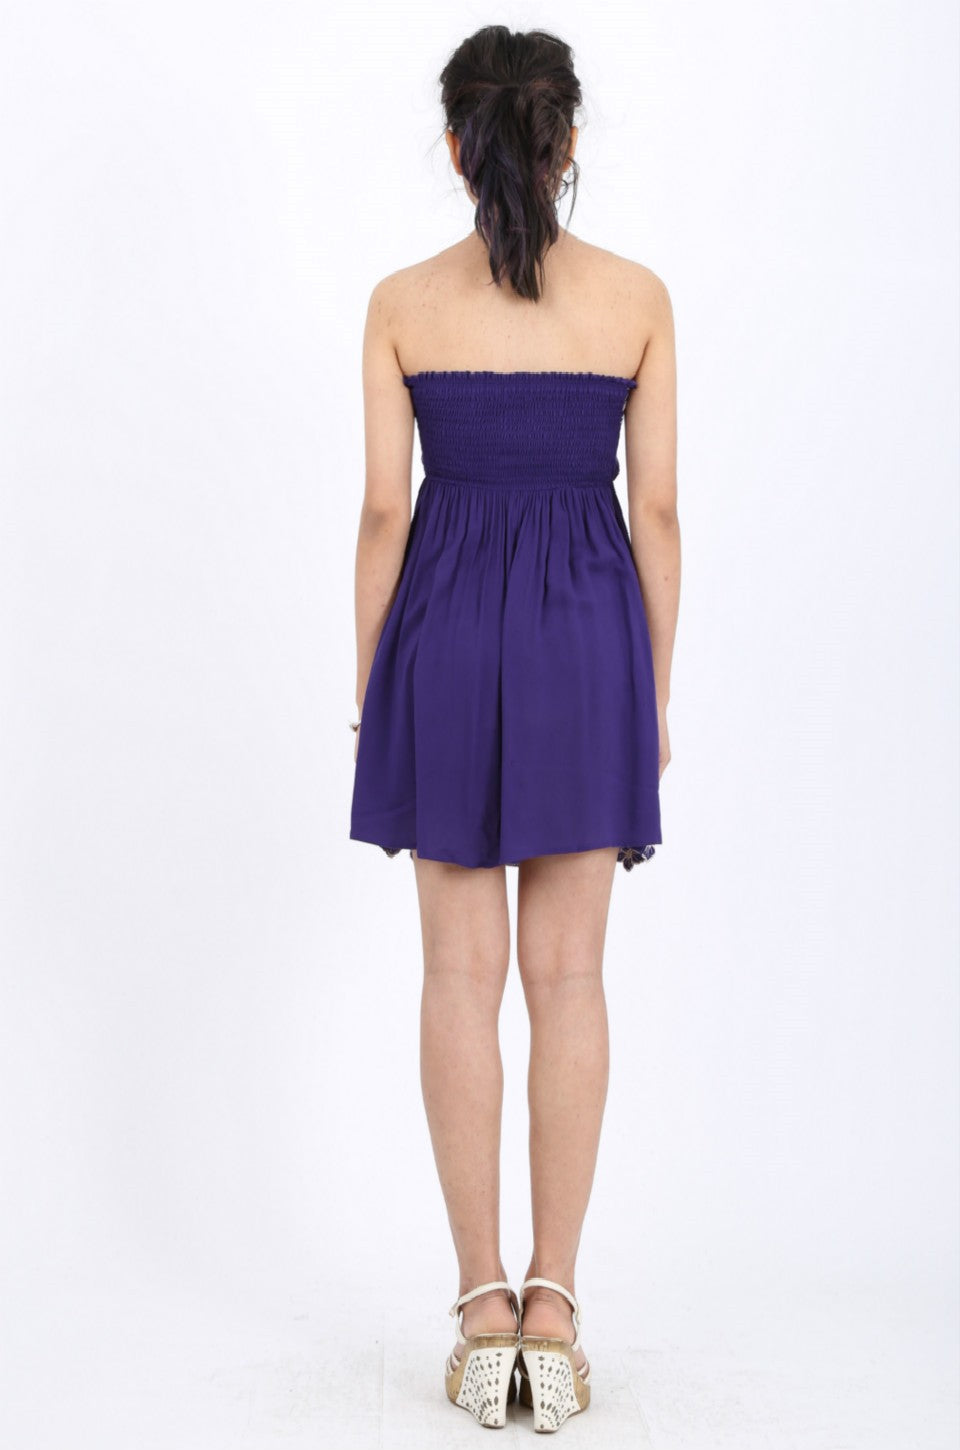 MISS PINKI Aria Embroidery dress in purple boob-tube dress casual dress summer dress sundress beach dress